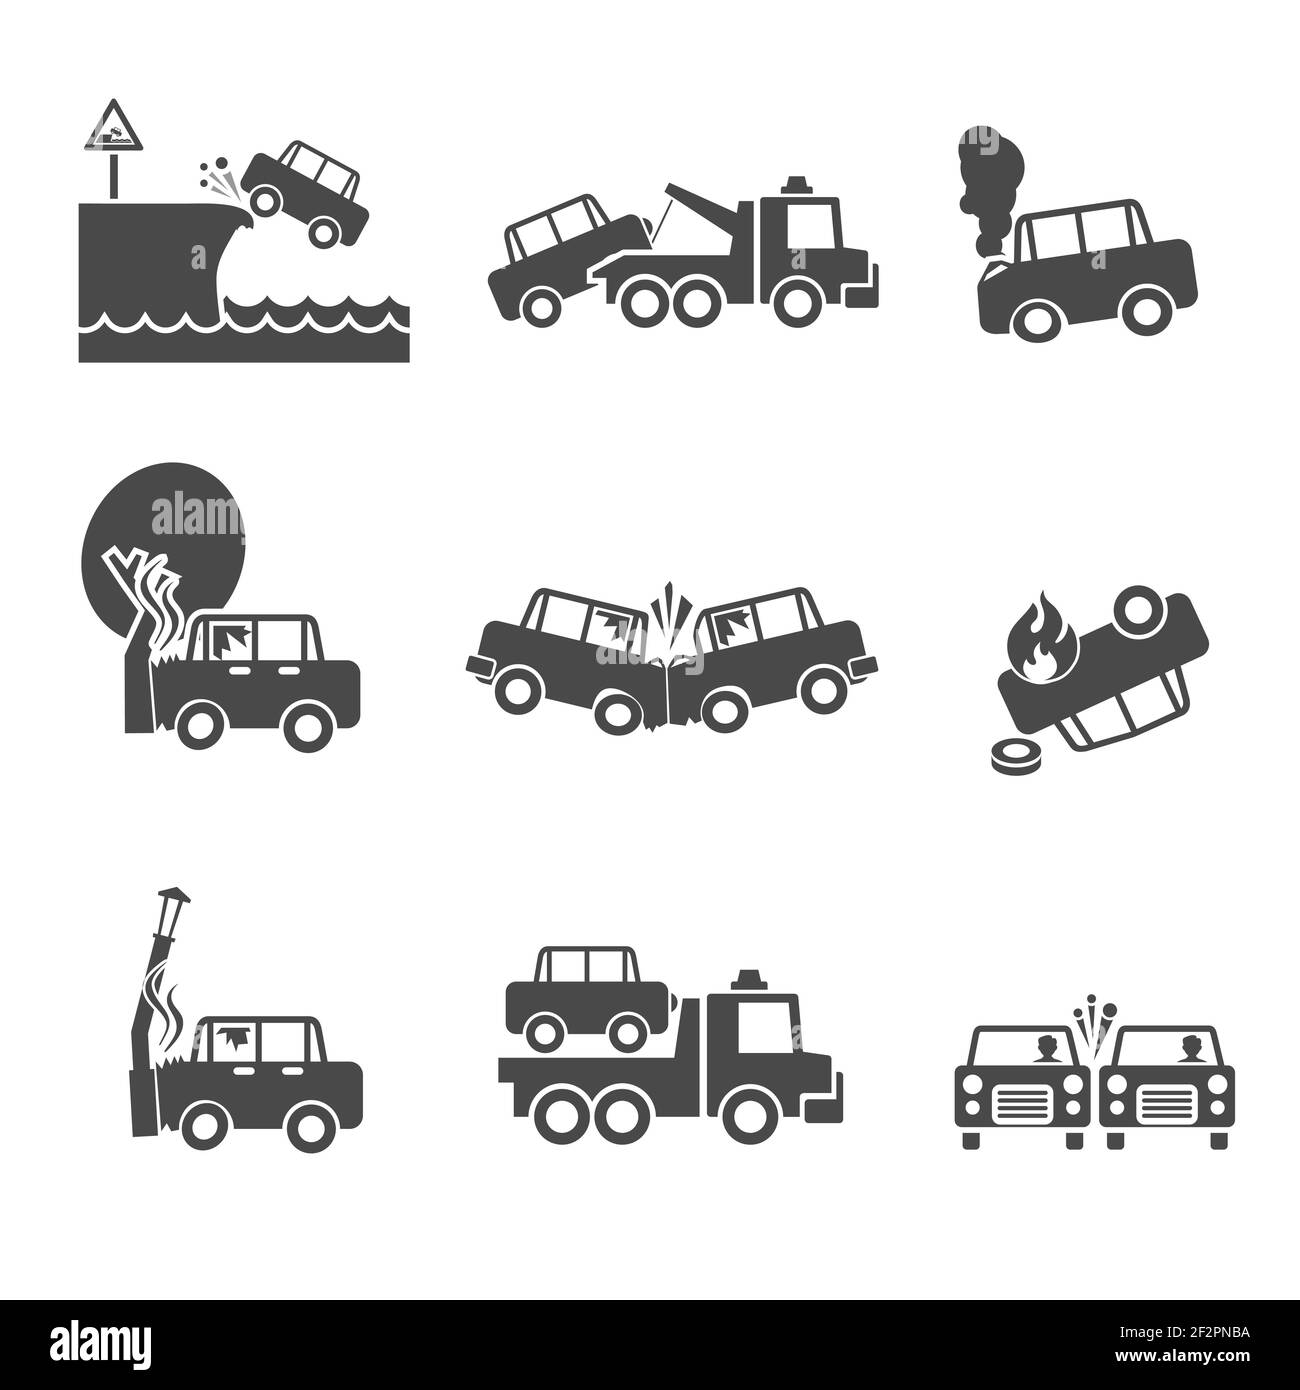 Car light Vectors & Illustrations for Free Download